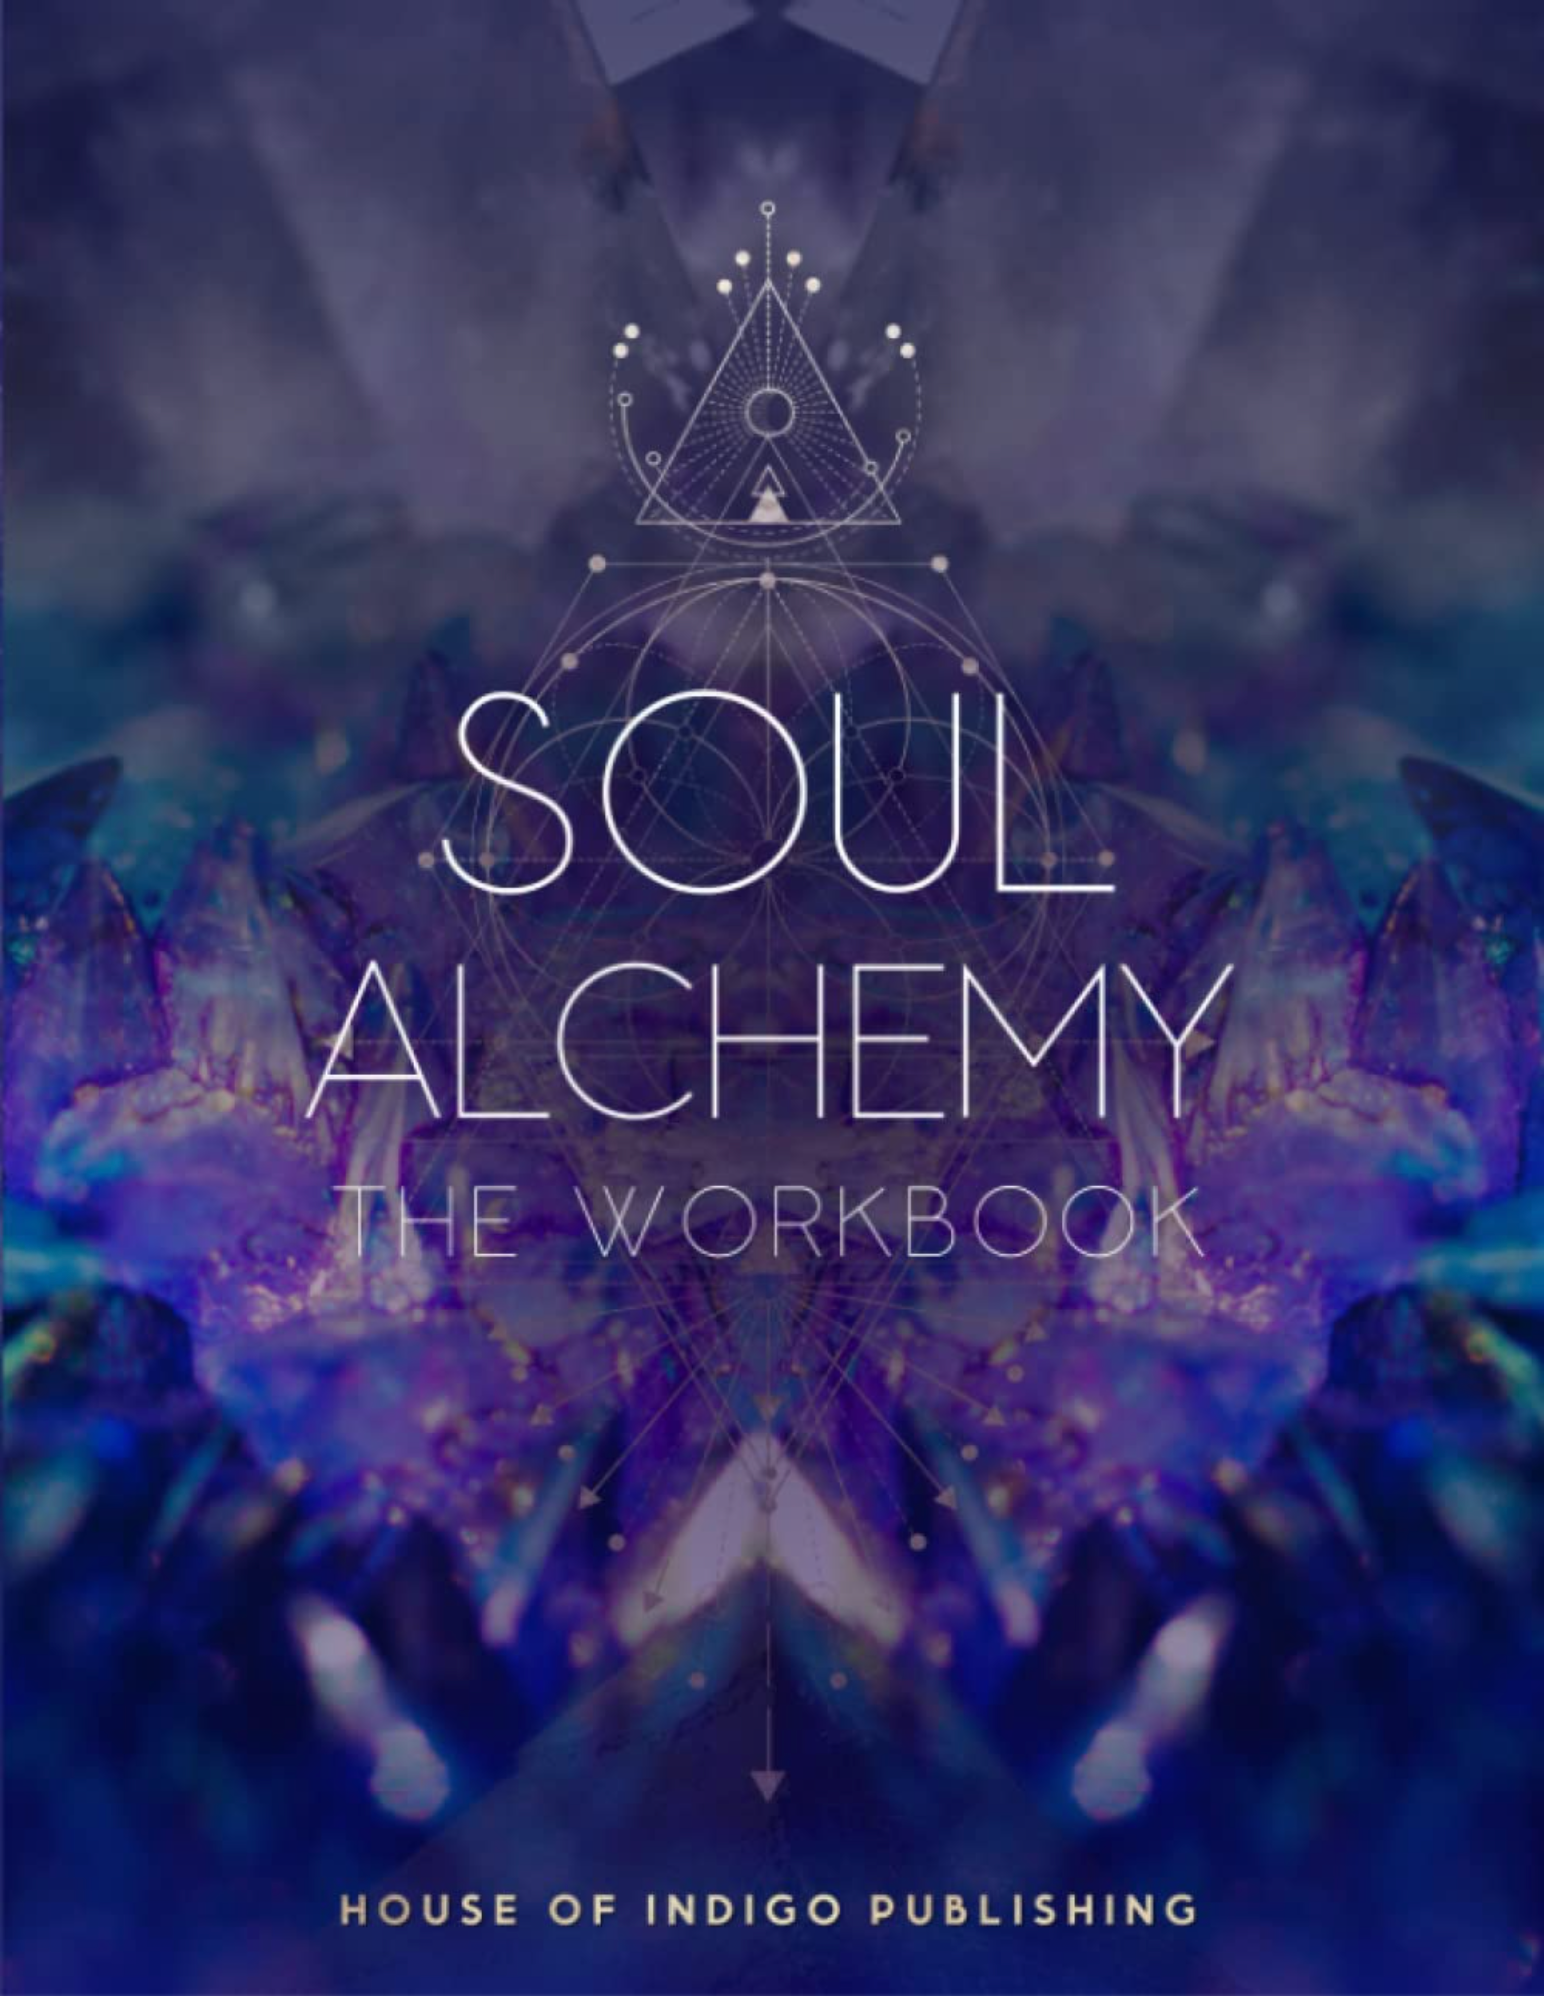 The Alchemist – Soul